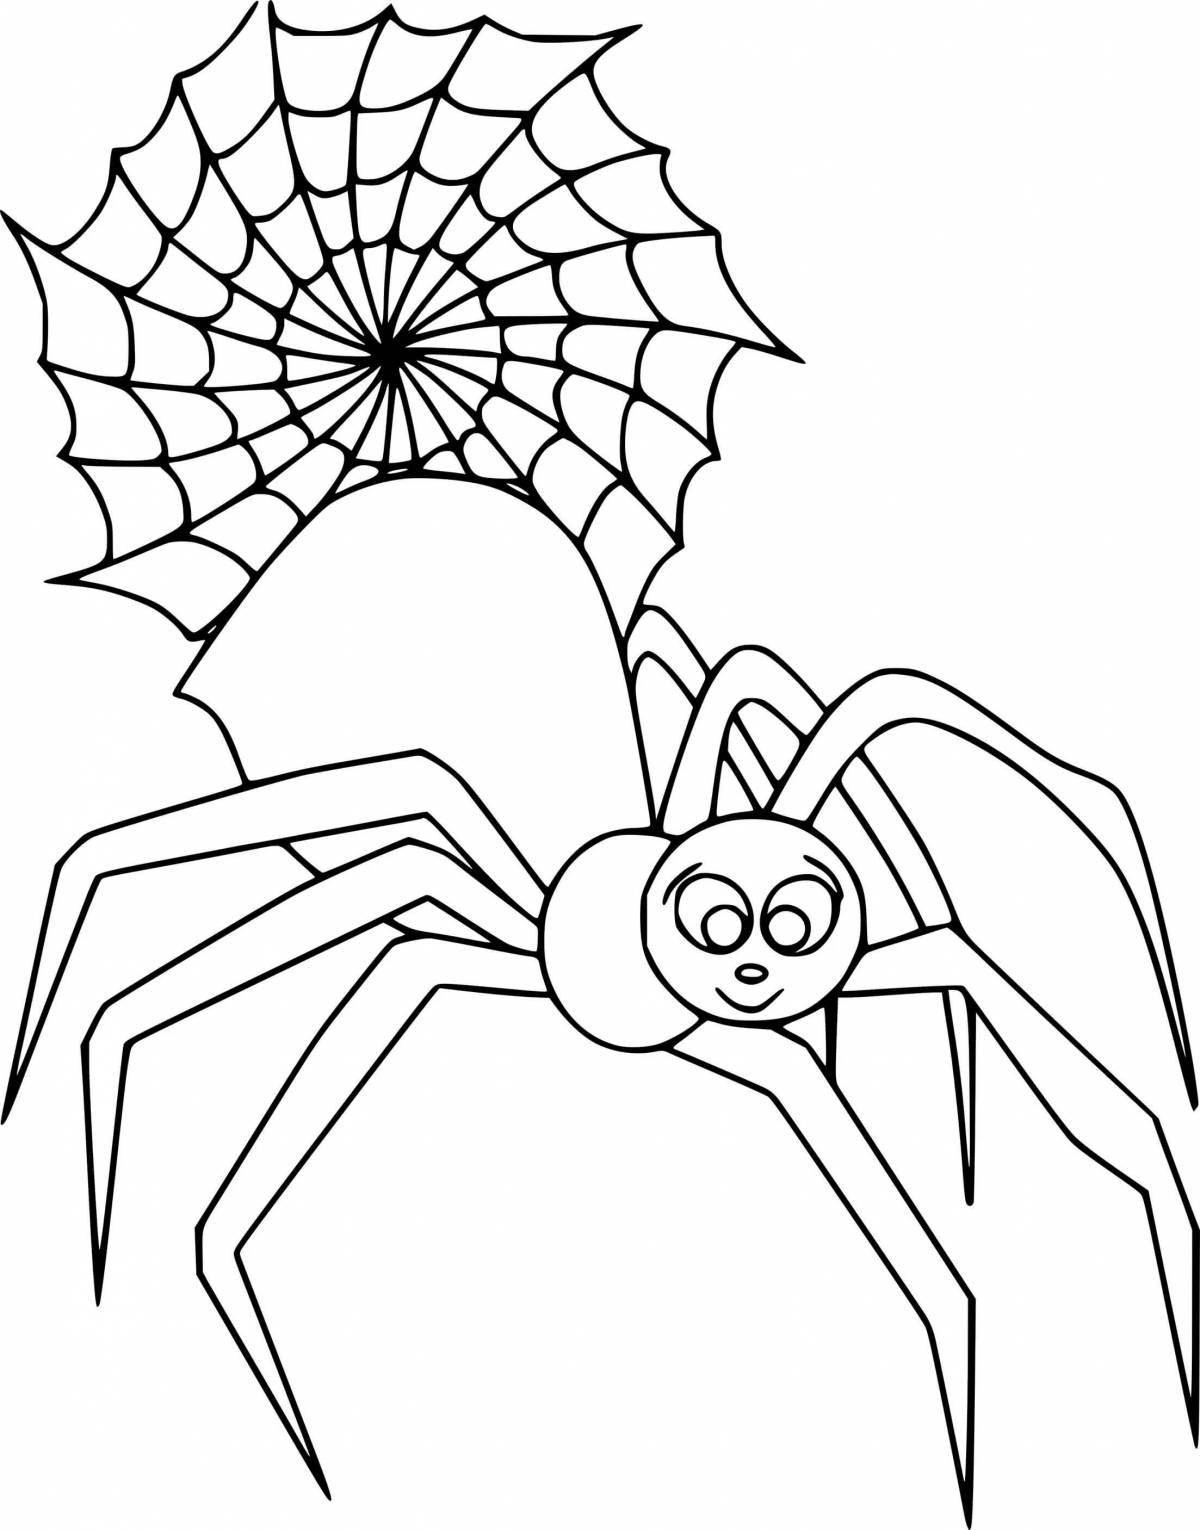 Adorable spider coloring book for preschoolers